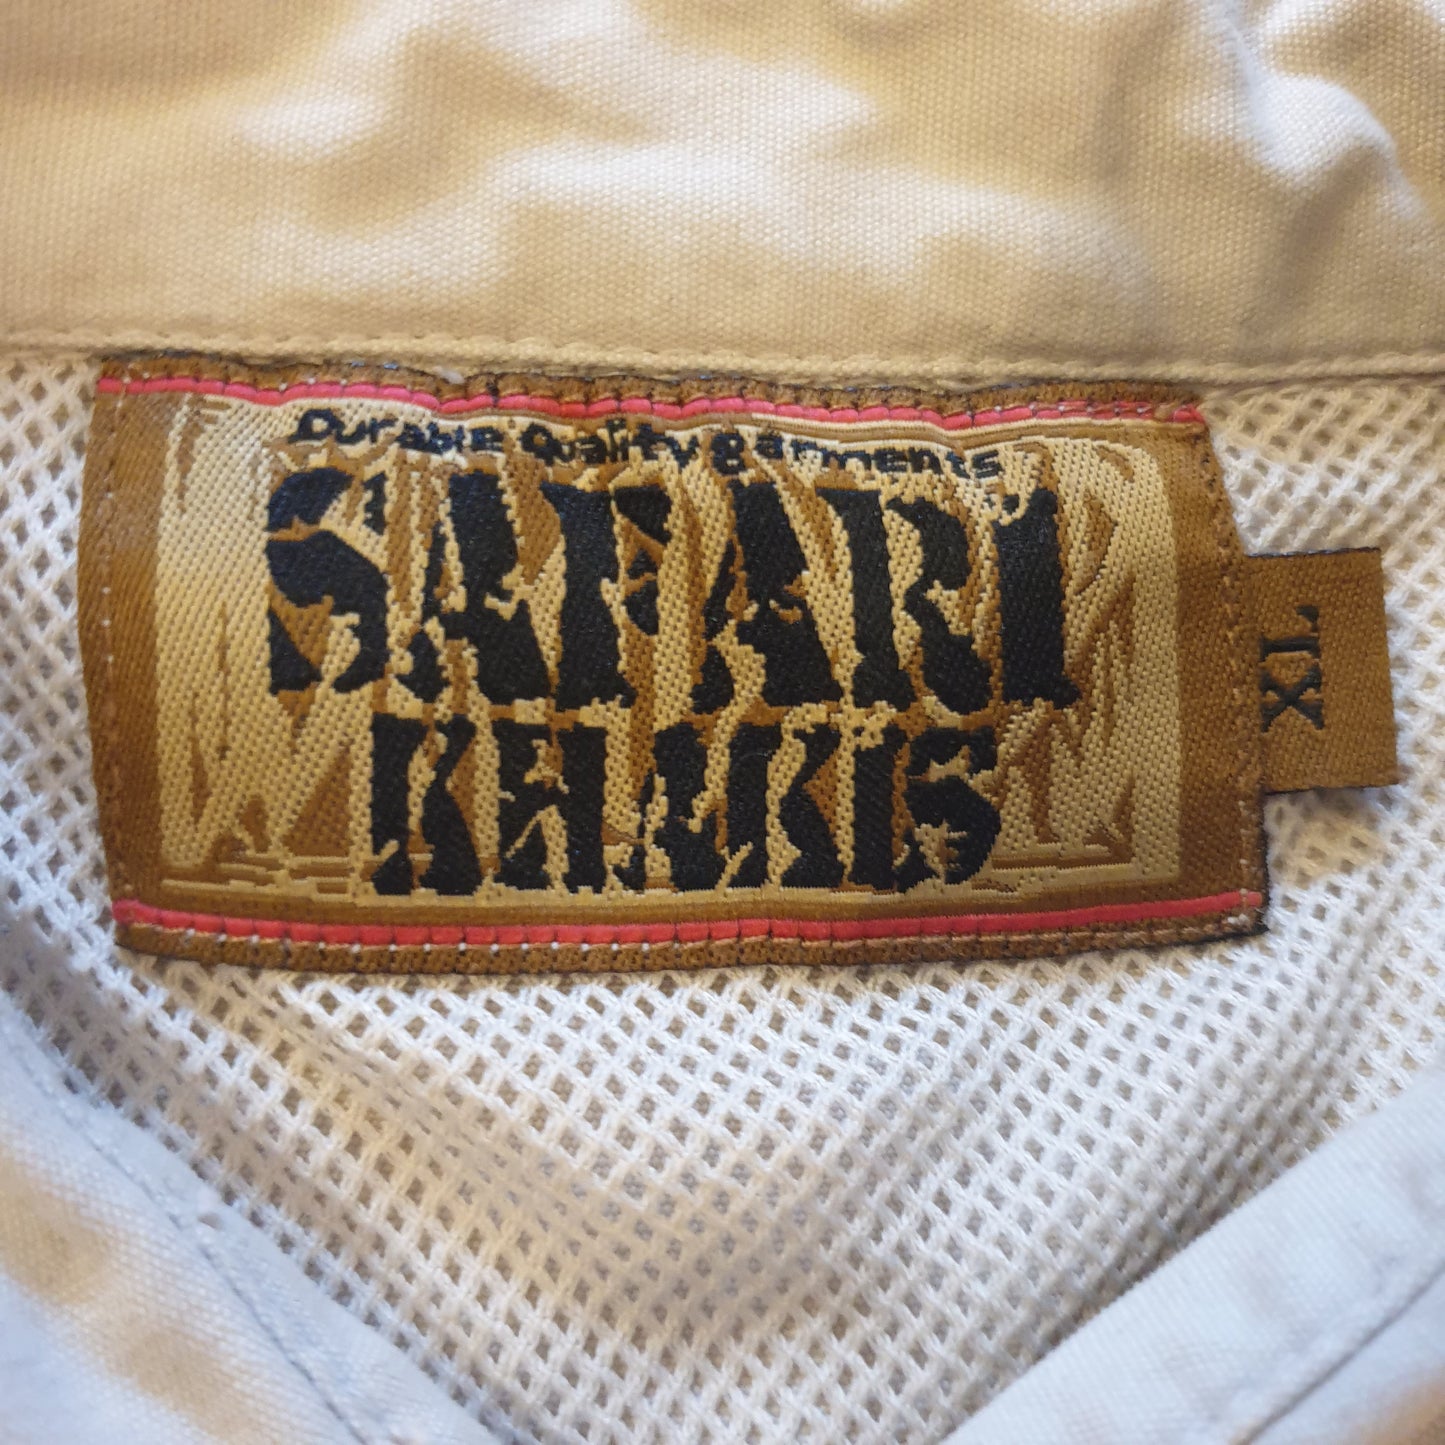 Safari Shirt XL